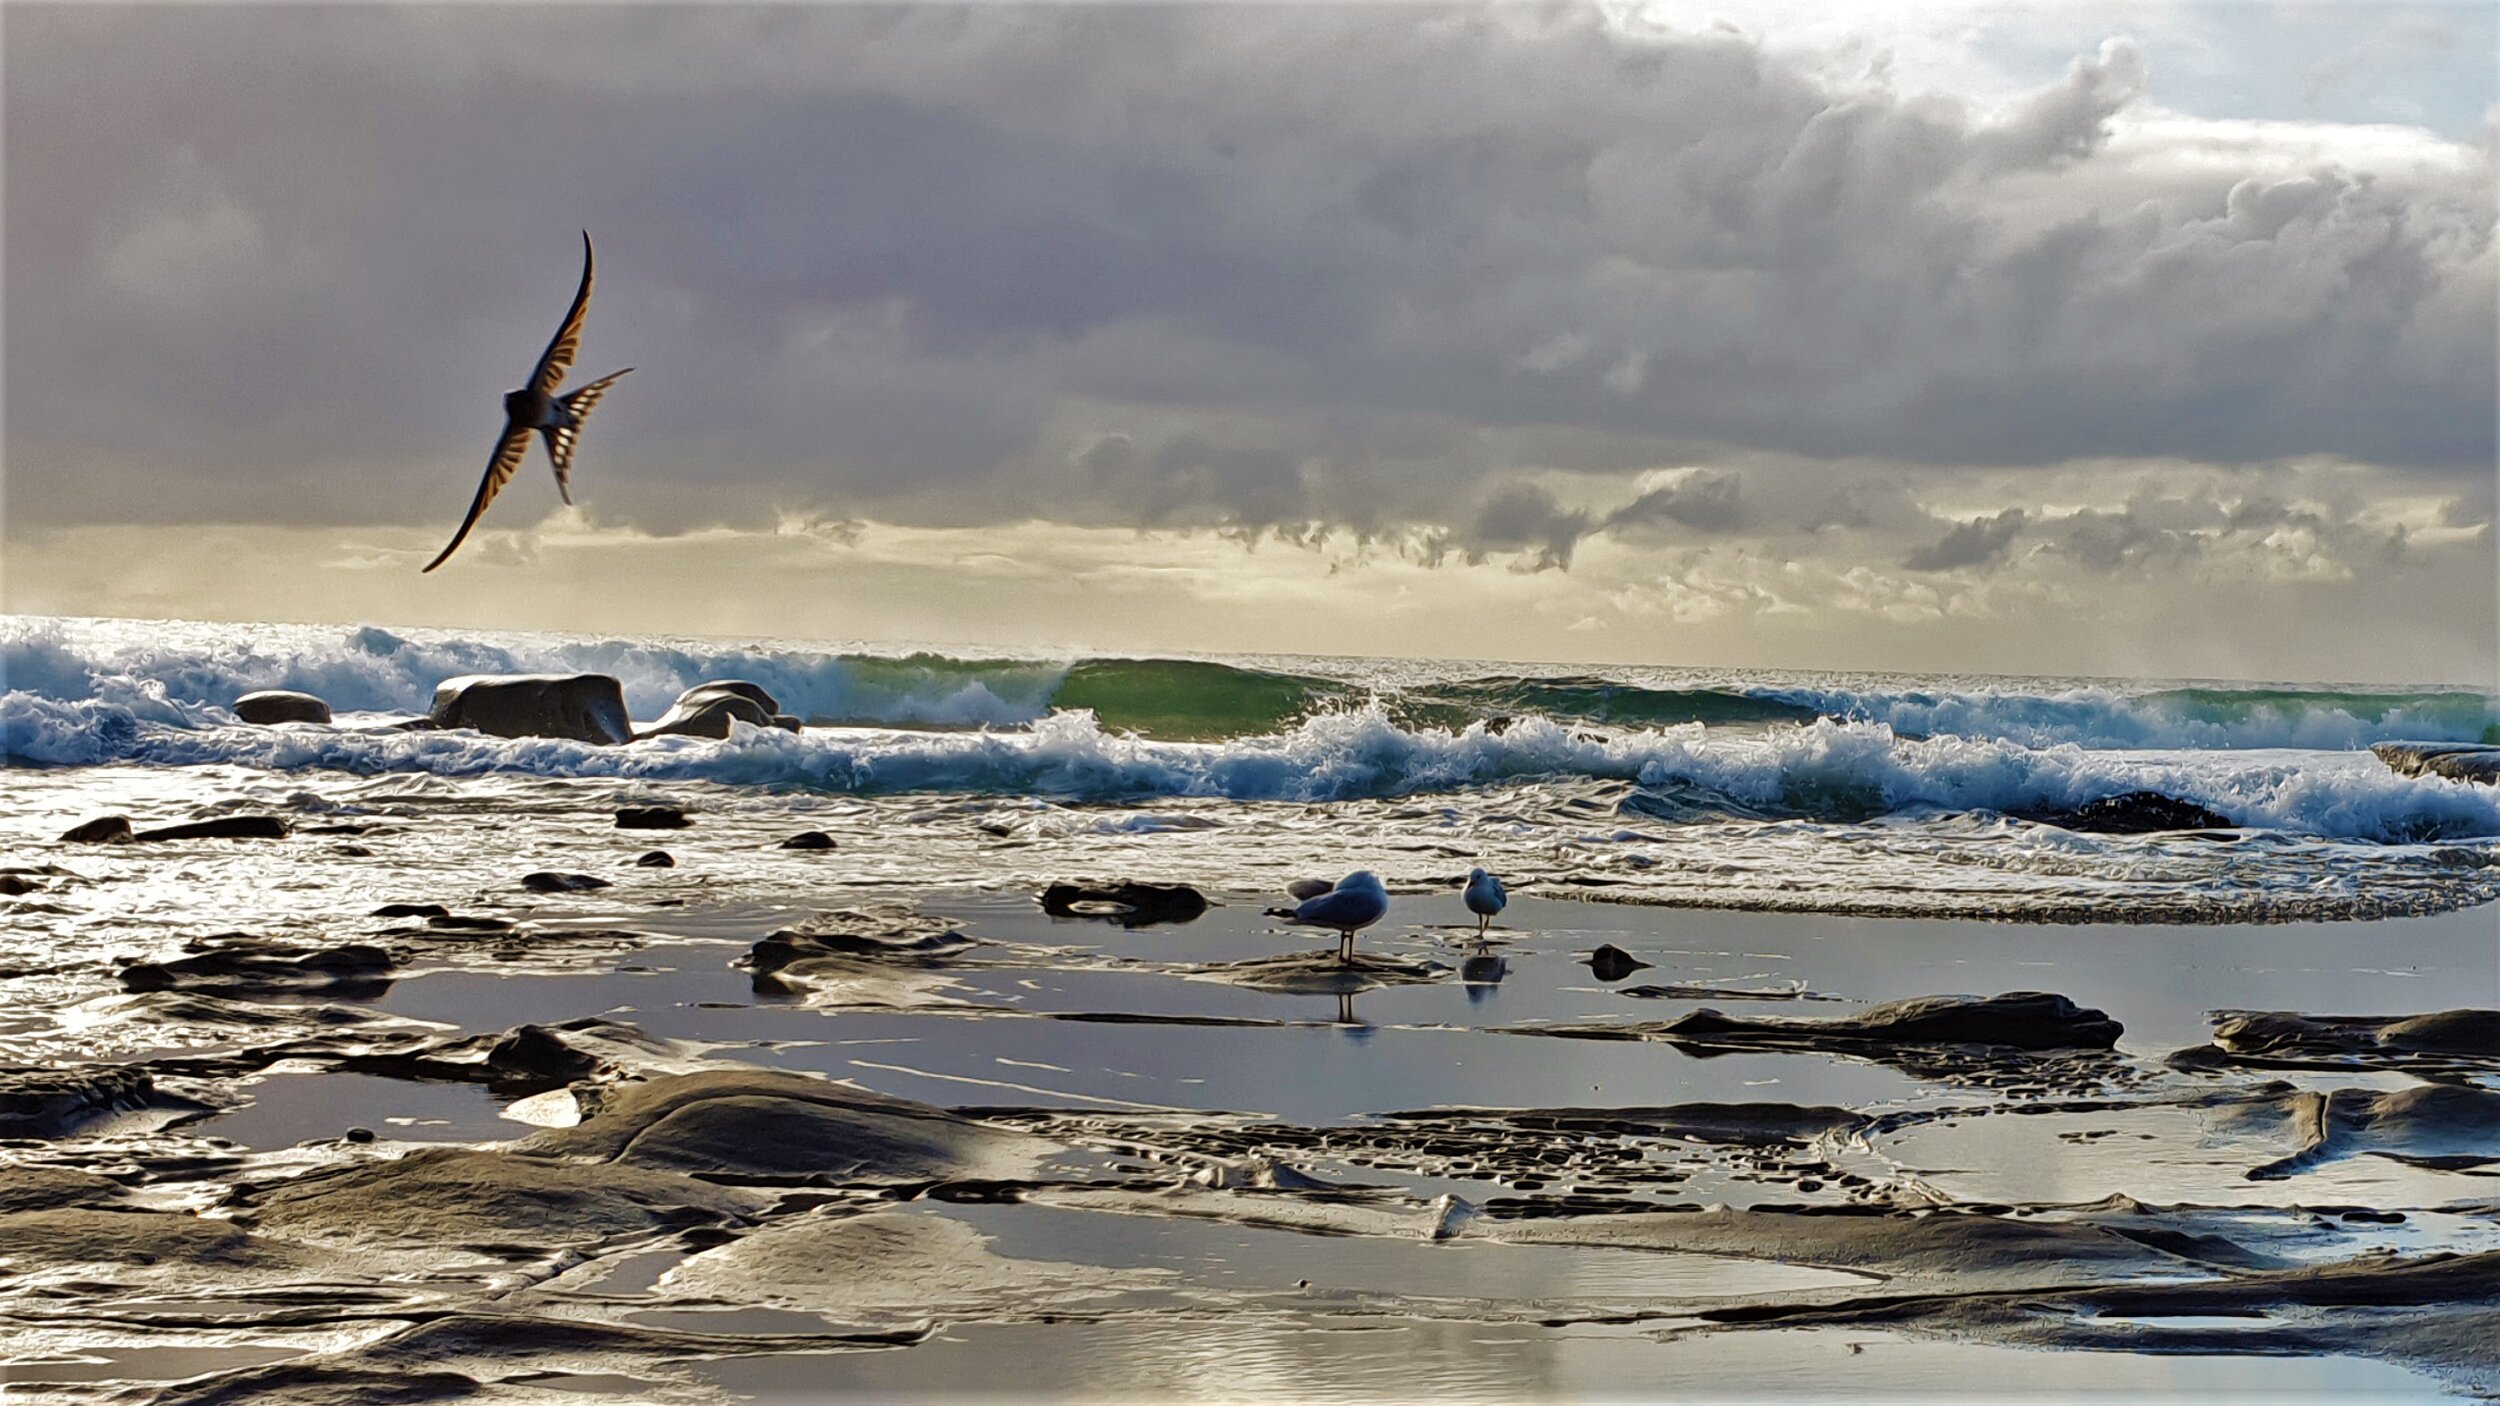 swift and seagulls at ocean sue moxon.jpg